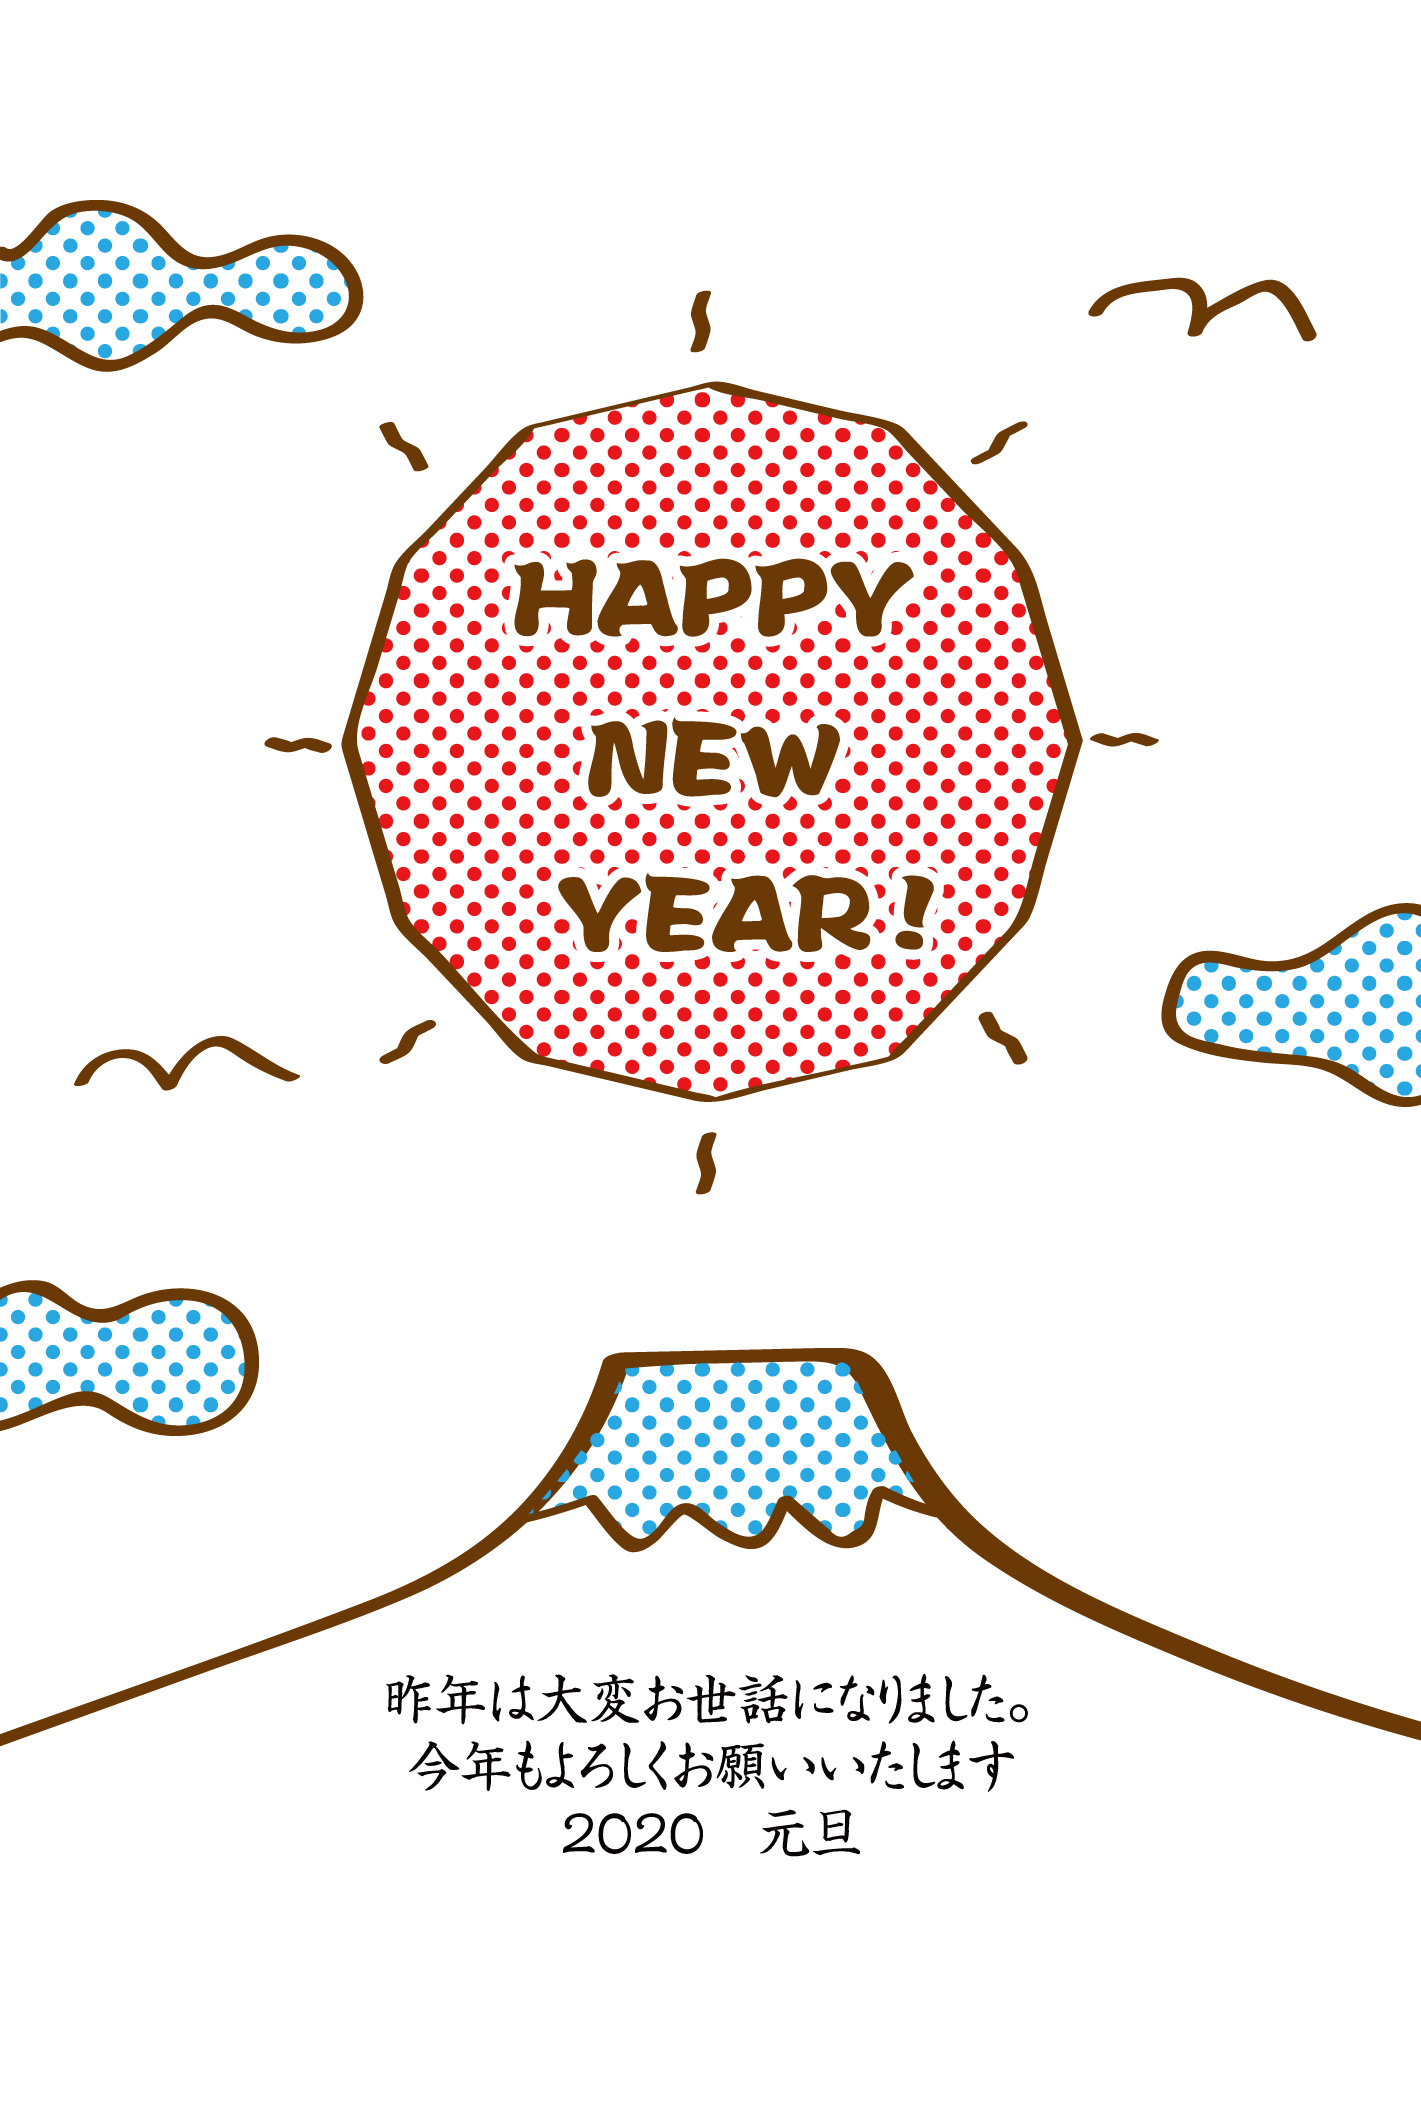 Happy New Year 富士山と初日の出のゆるかわ年賀状イラスト素材です